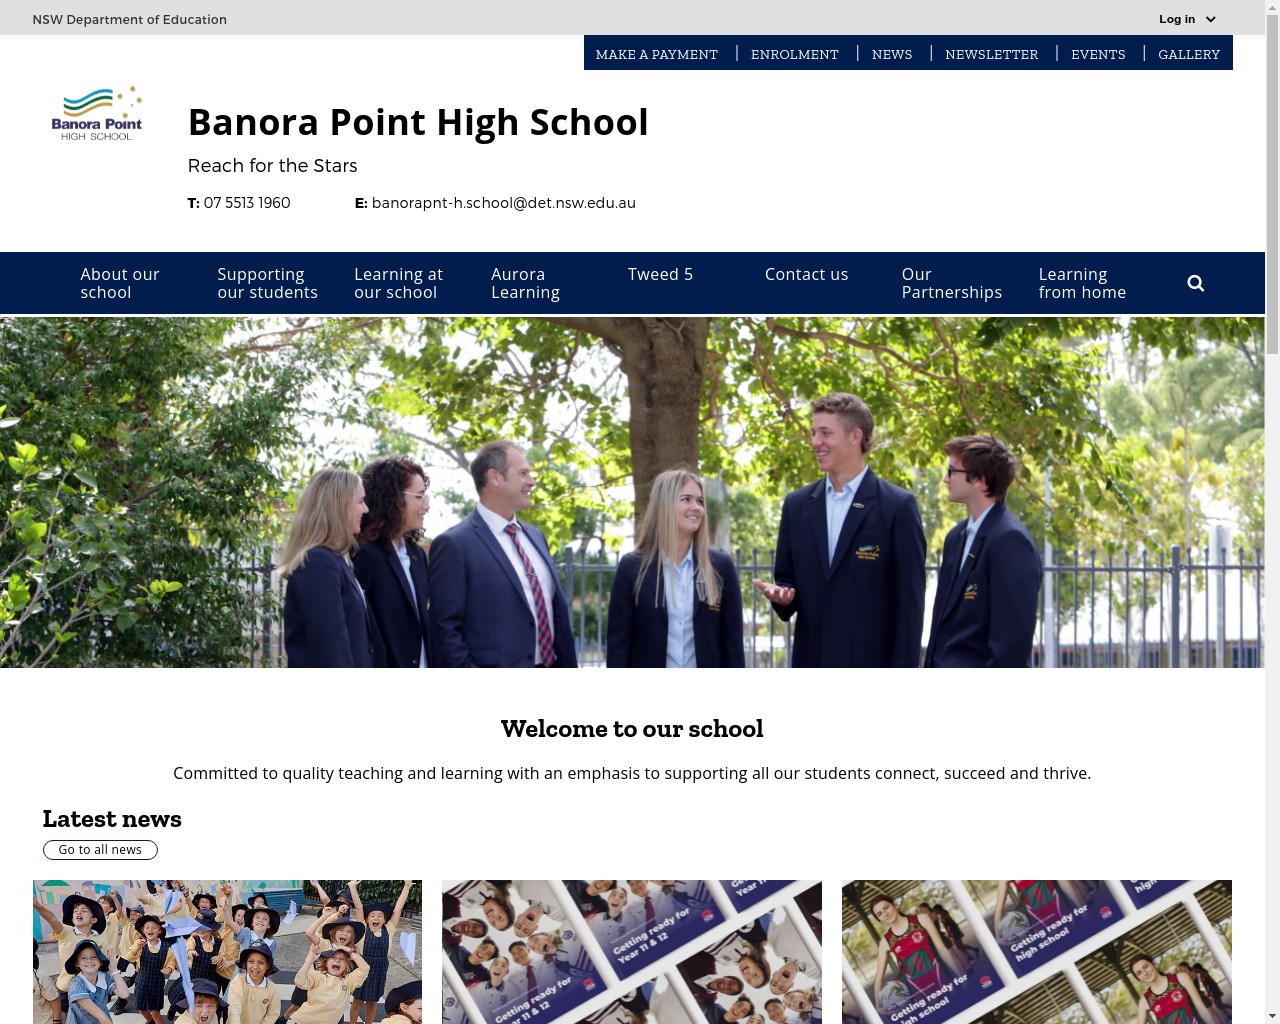 Banora Point High School